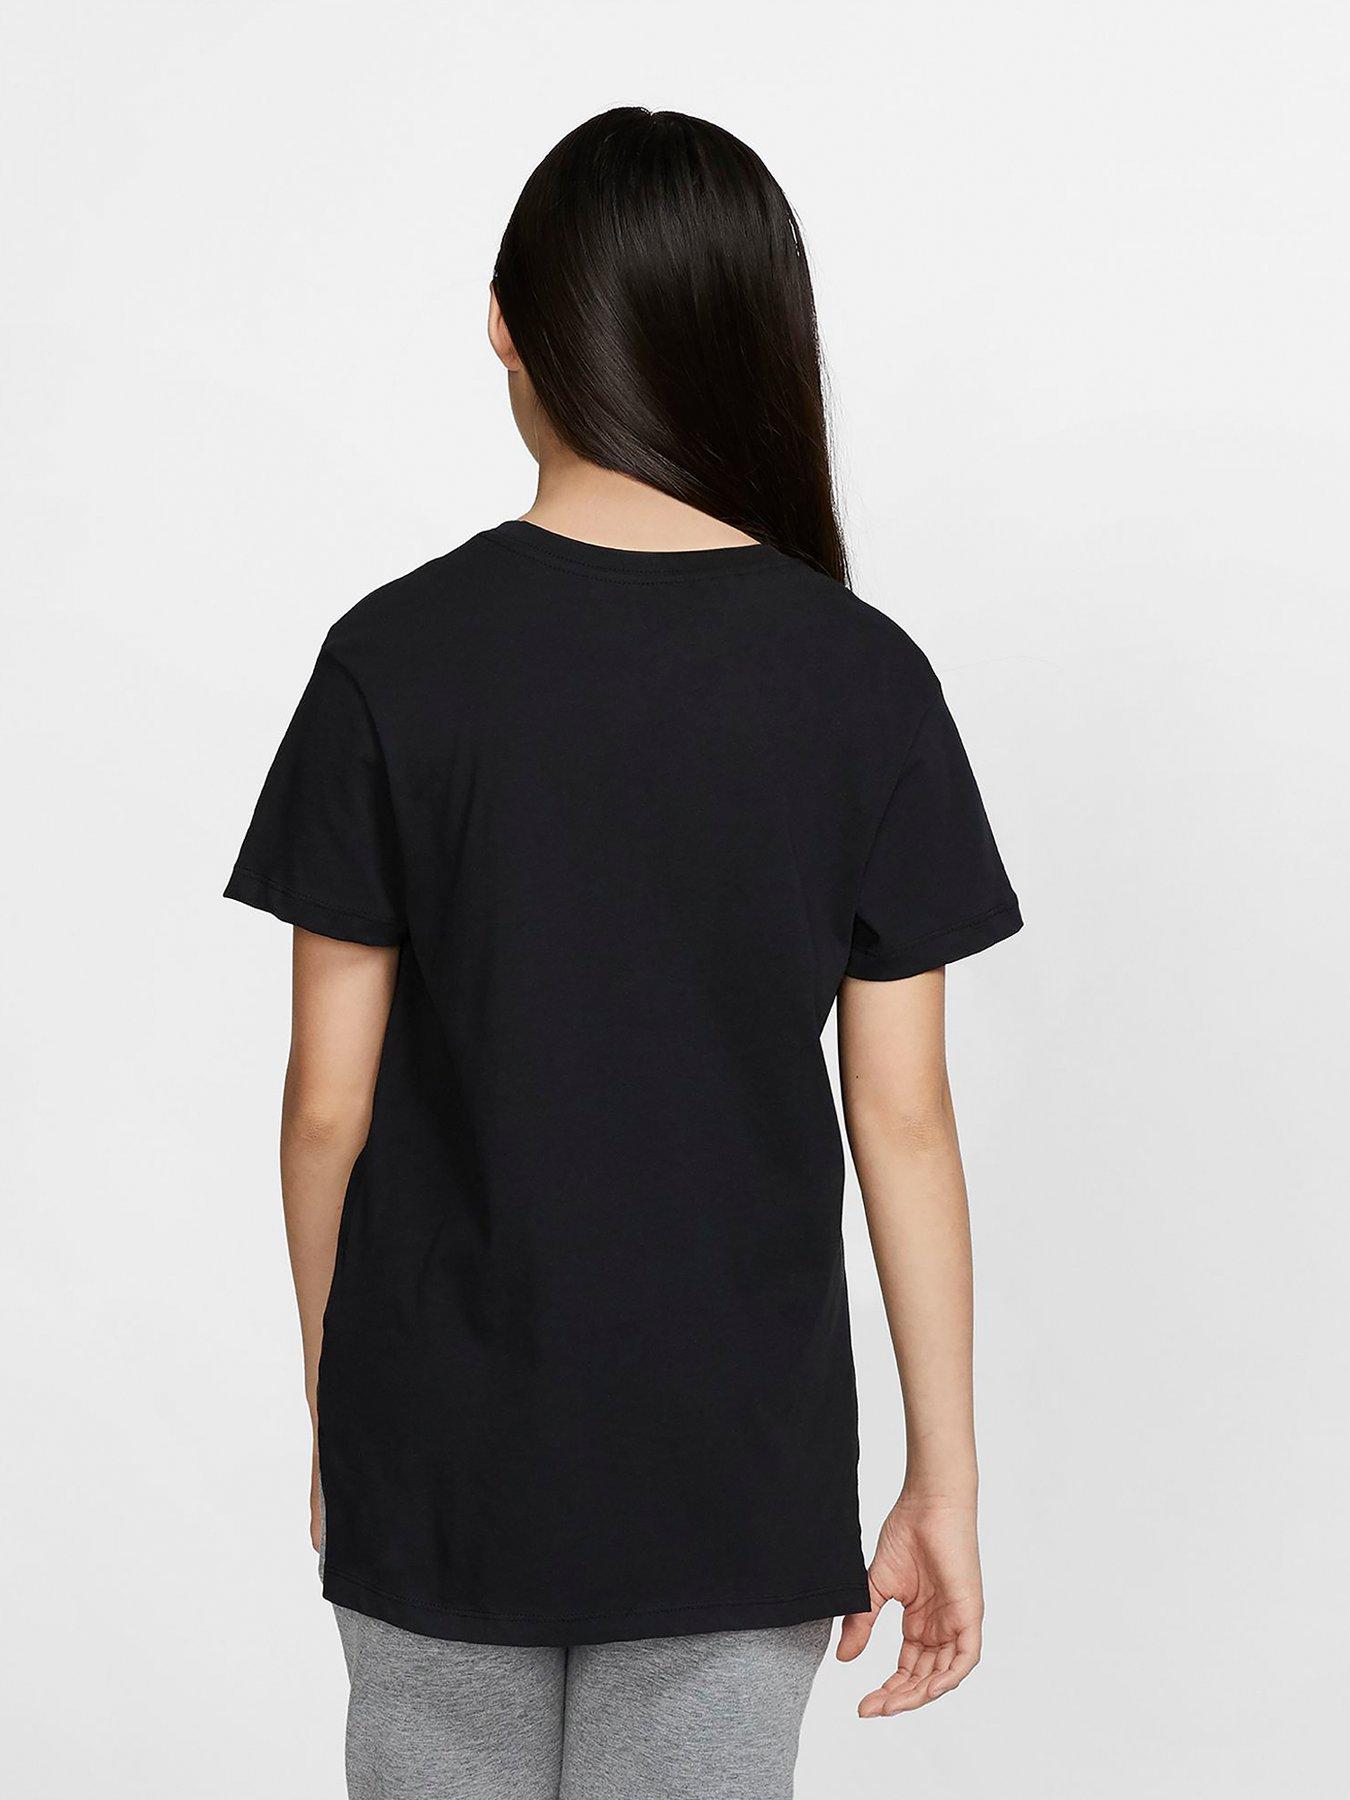 Nike Sportswear Basic Futura T-Shirt - Black/White | very.co.uk